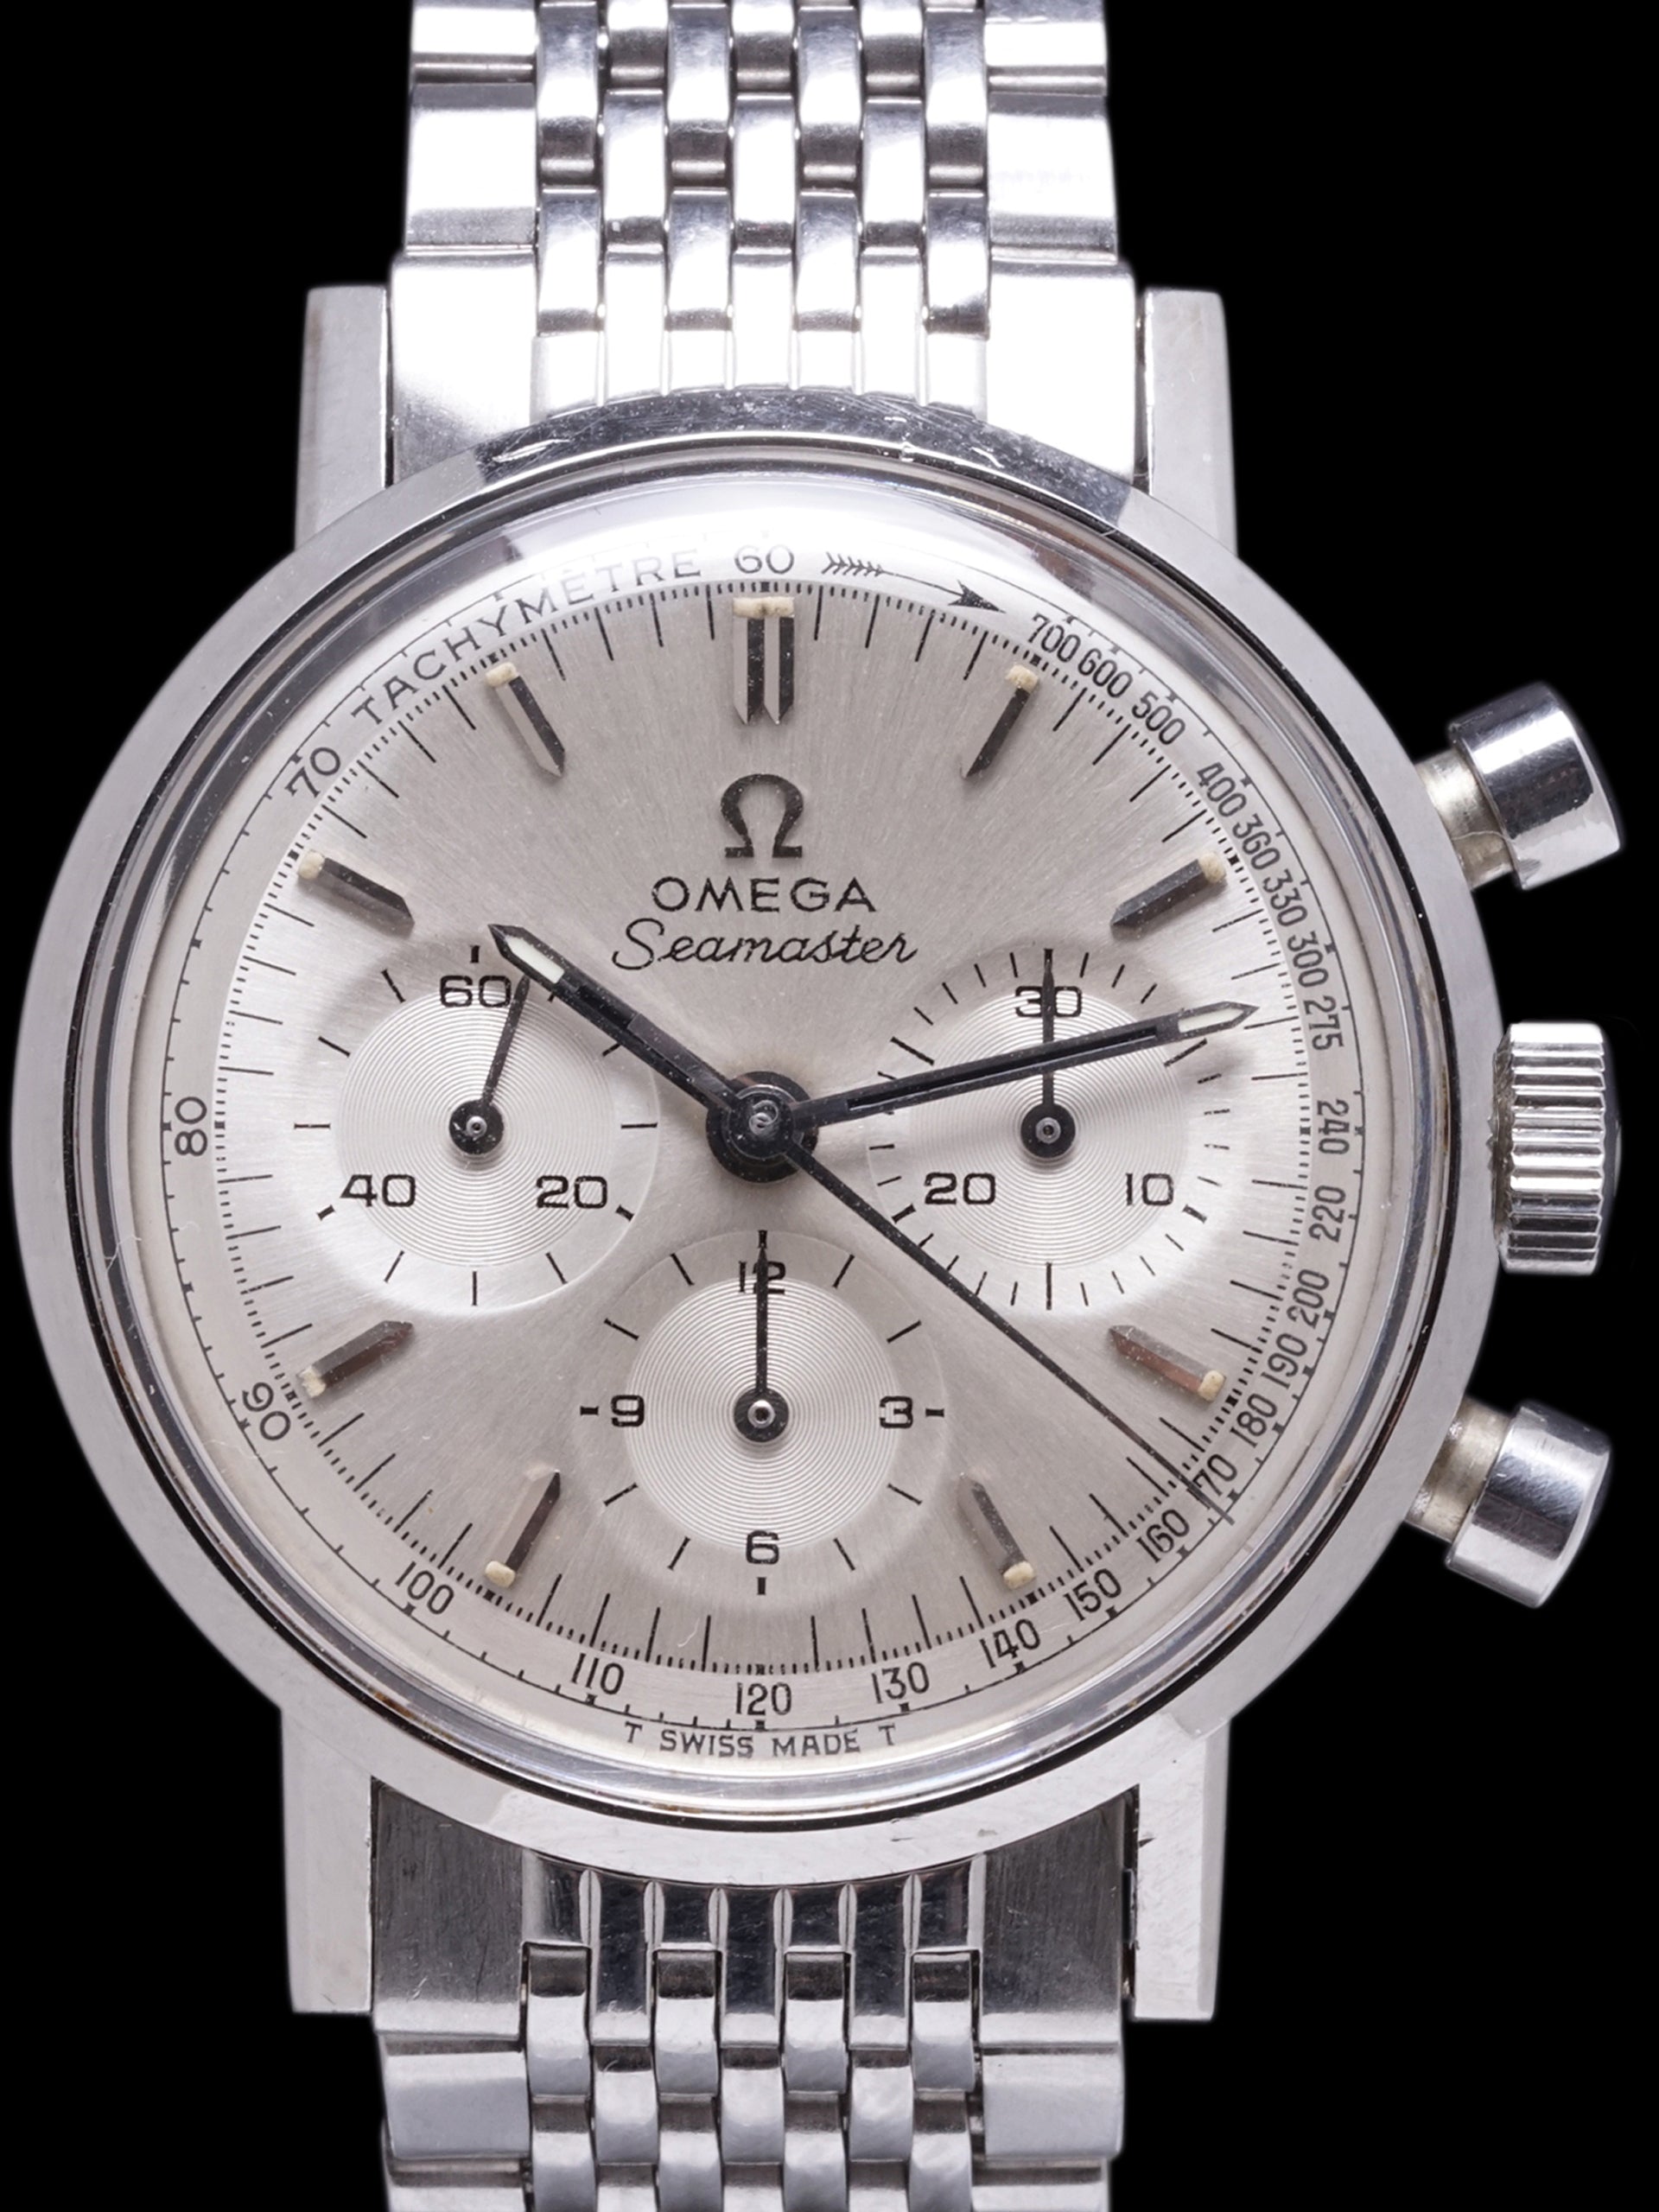 1967 Omega Seamaster Chronograph (Ref.145.005) Cal. 321